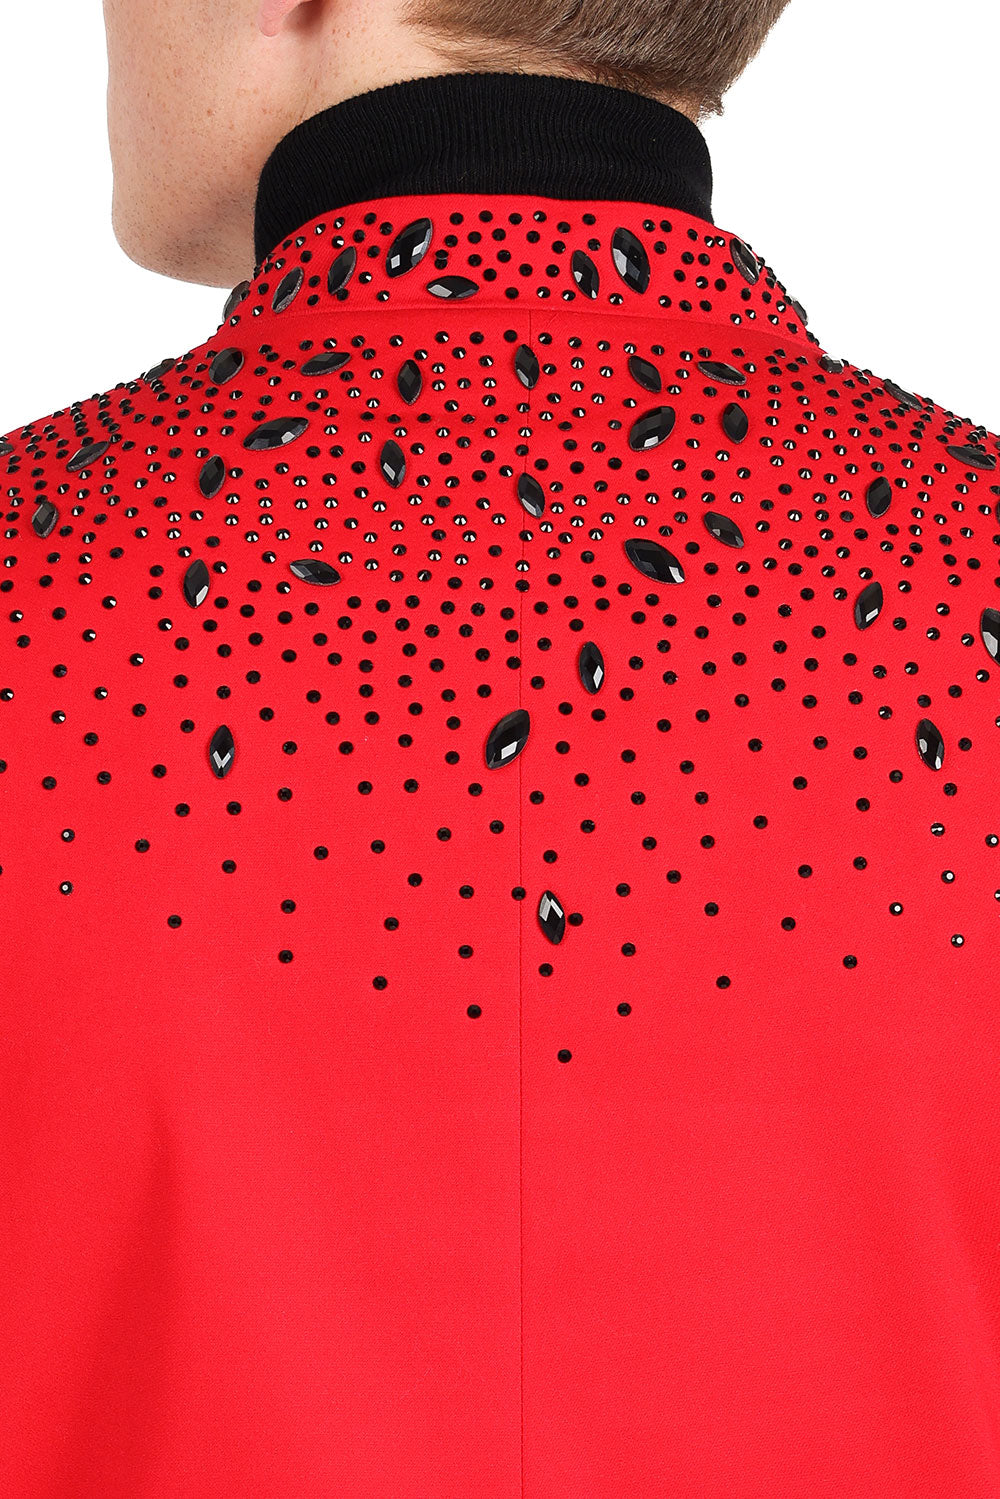 BARABAS Men's Luxury Rhinestone Lapel Collar Designer Blazer BL3080 Red Black